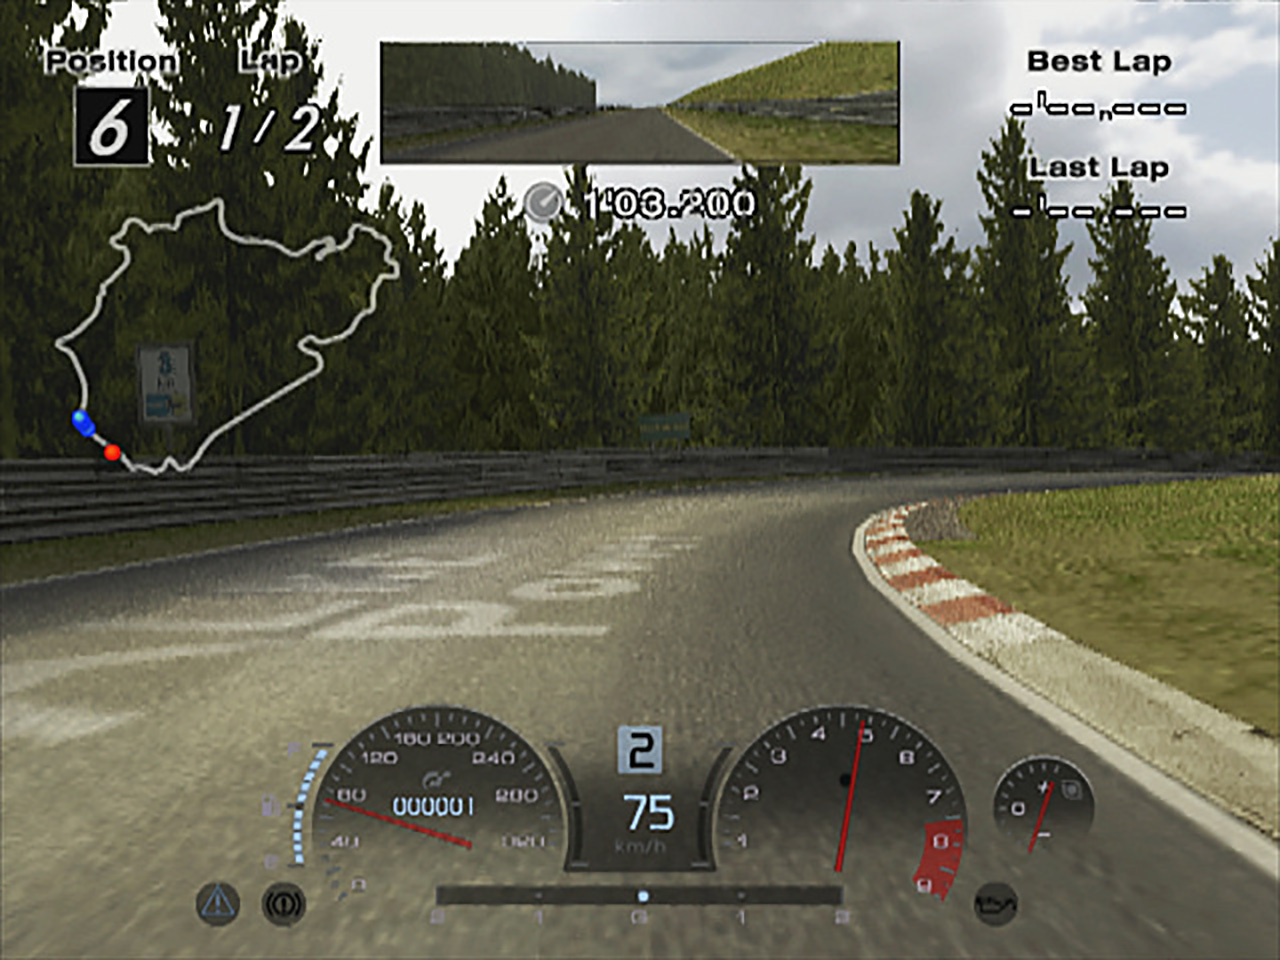 Gran Turismo 4 - PS2 Gameplay 